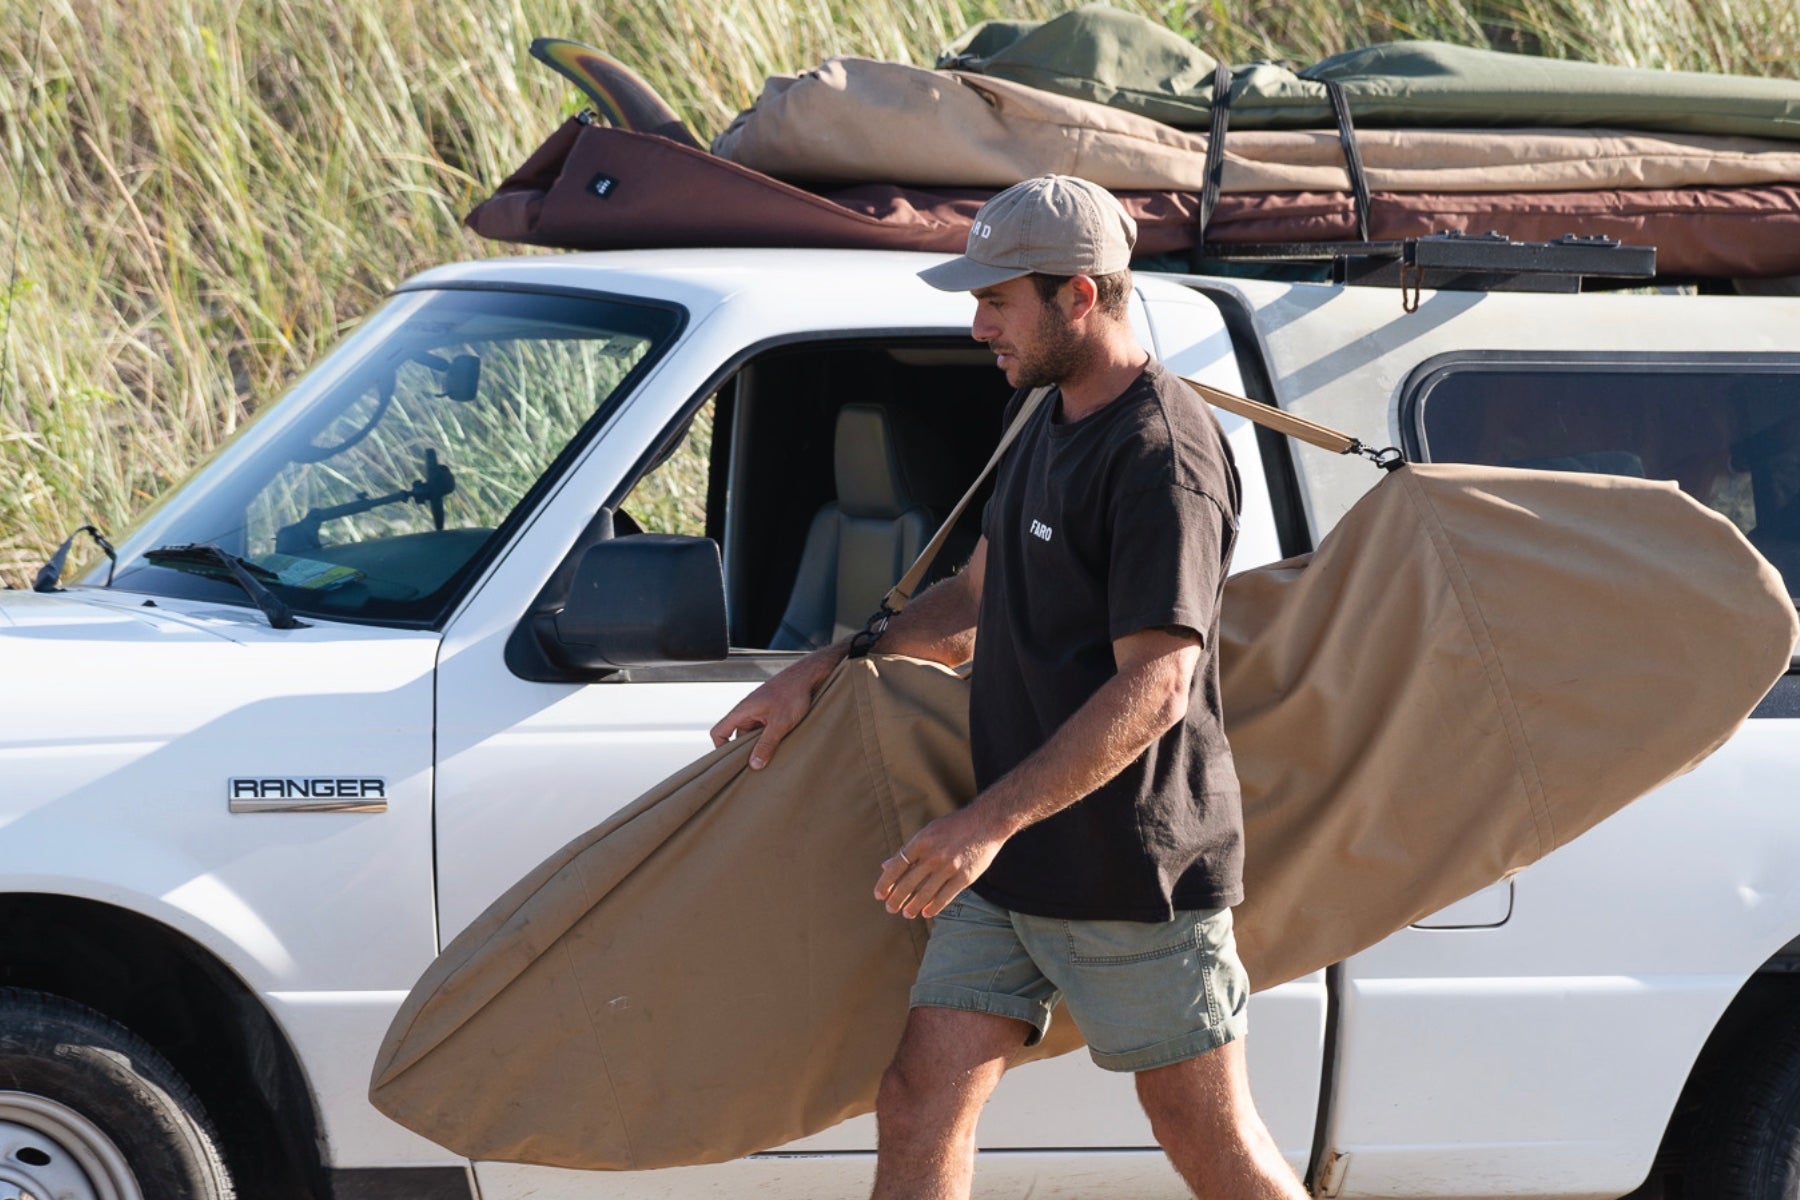 Faro tan surfboad bag going into a truck